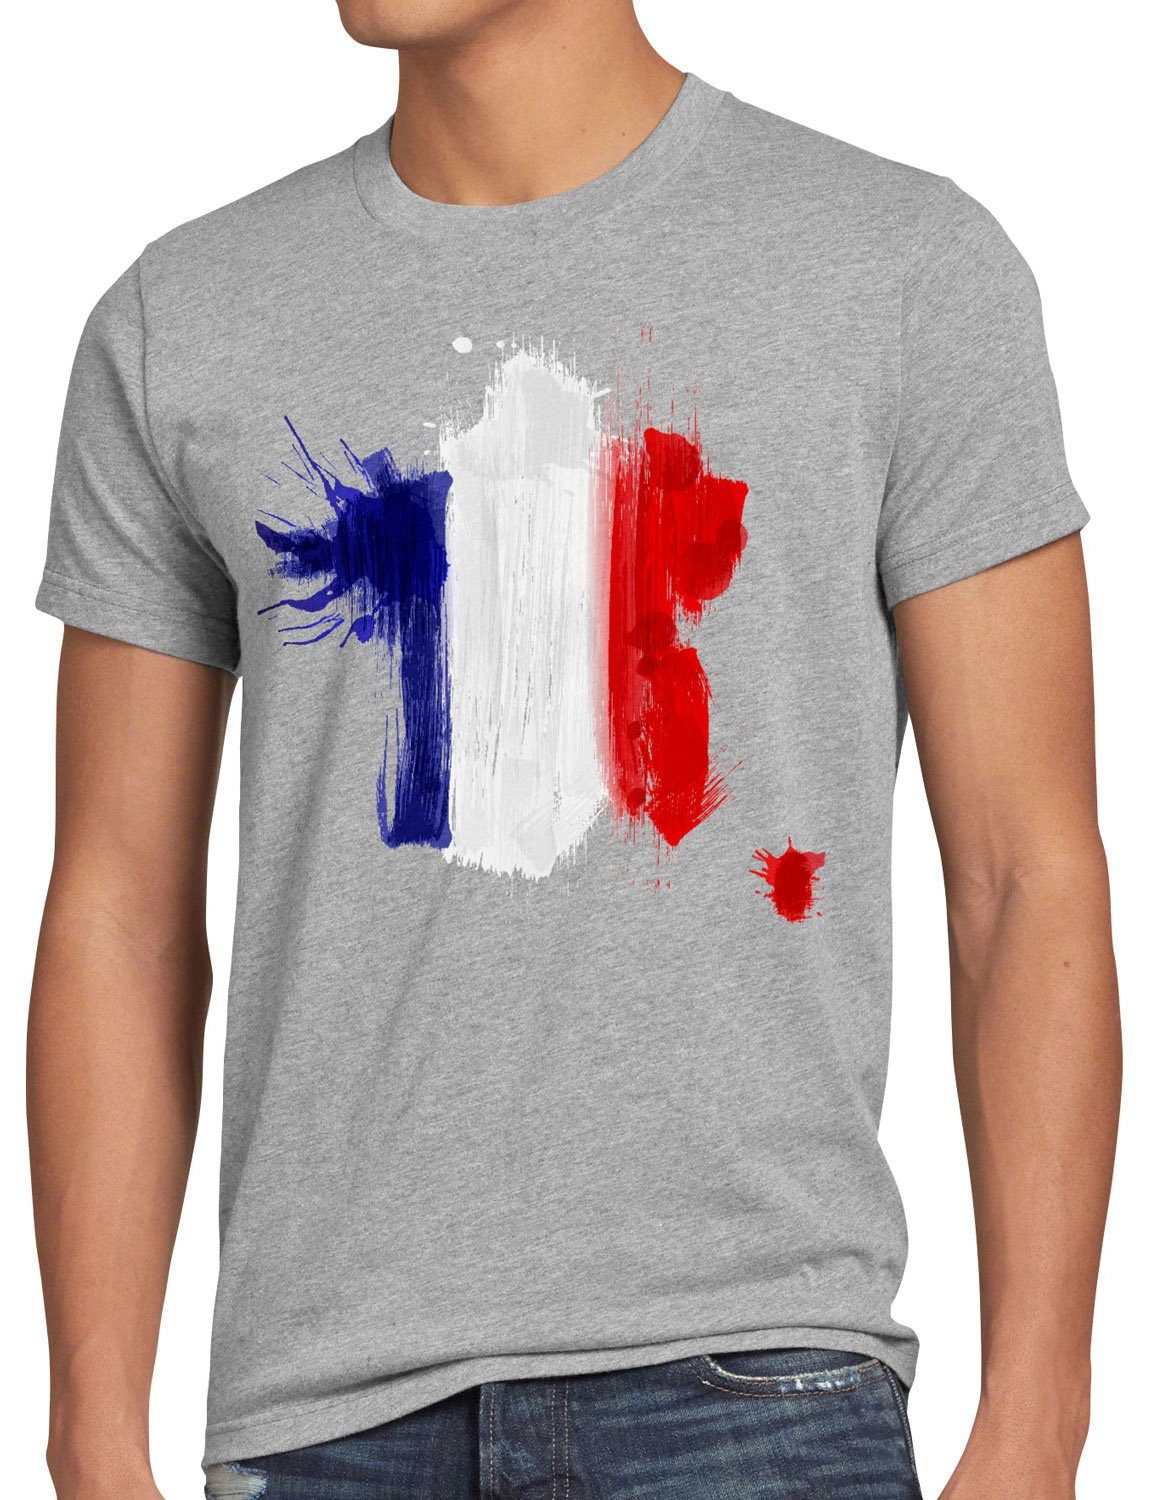 Fußball Sport T-Shirt meliert style3 grau Herren Fahne EM Frankreich Flagge France Print-Shirt WM